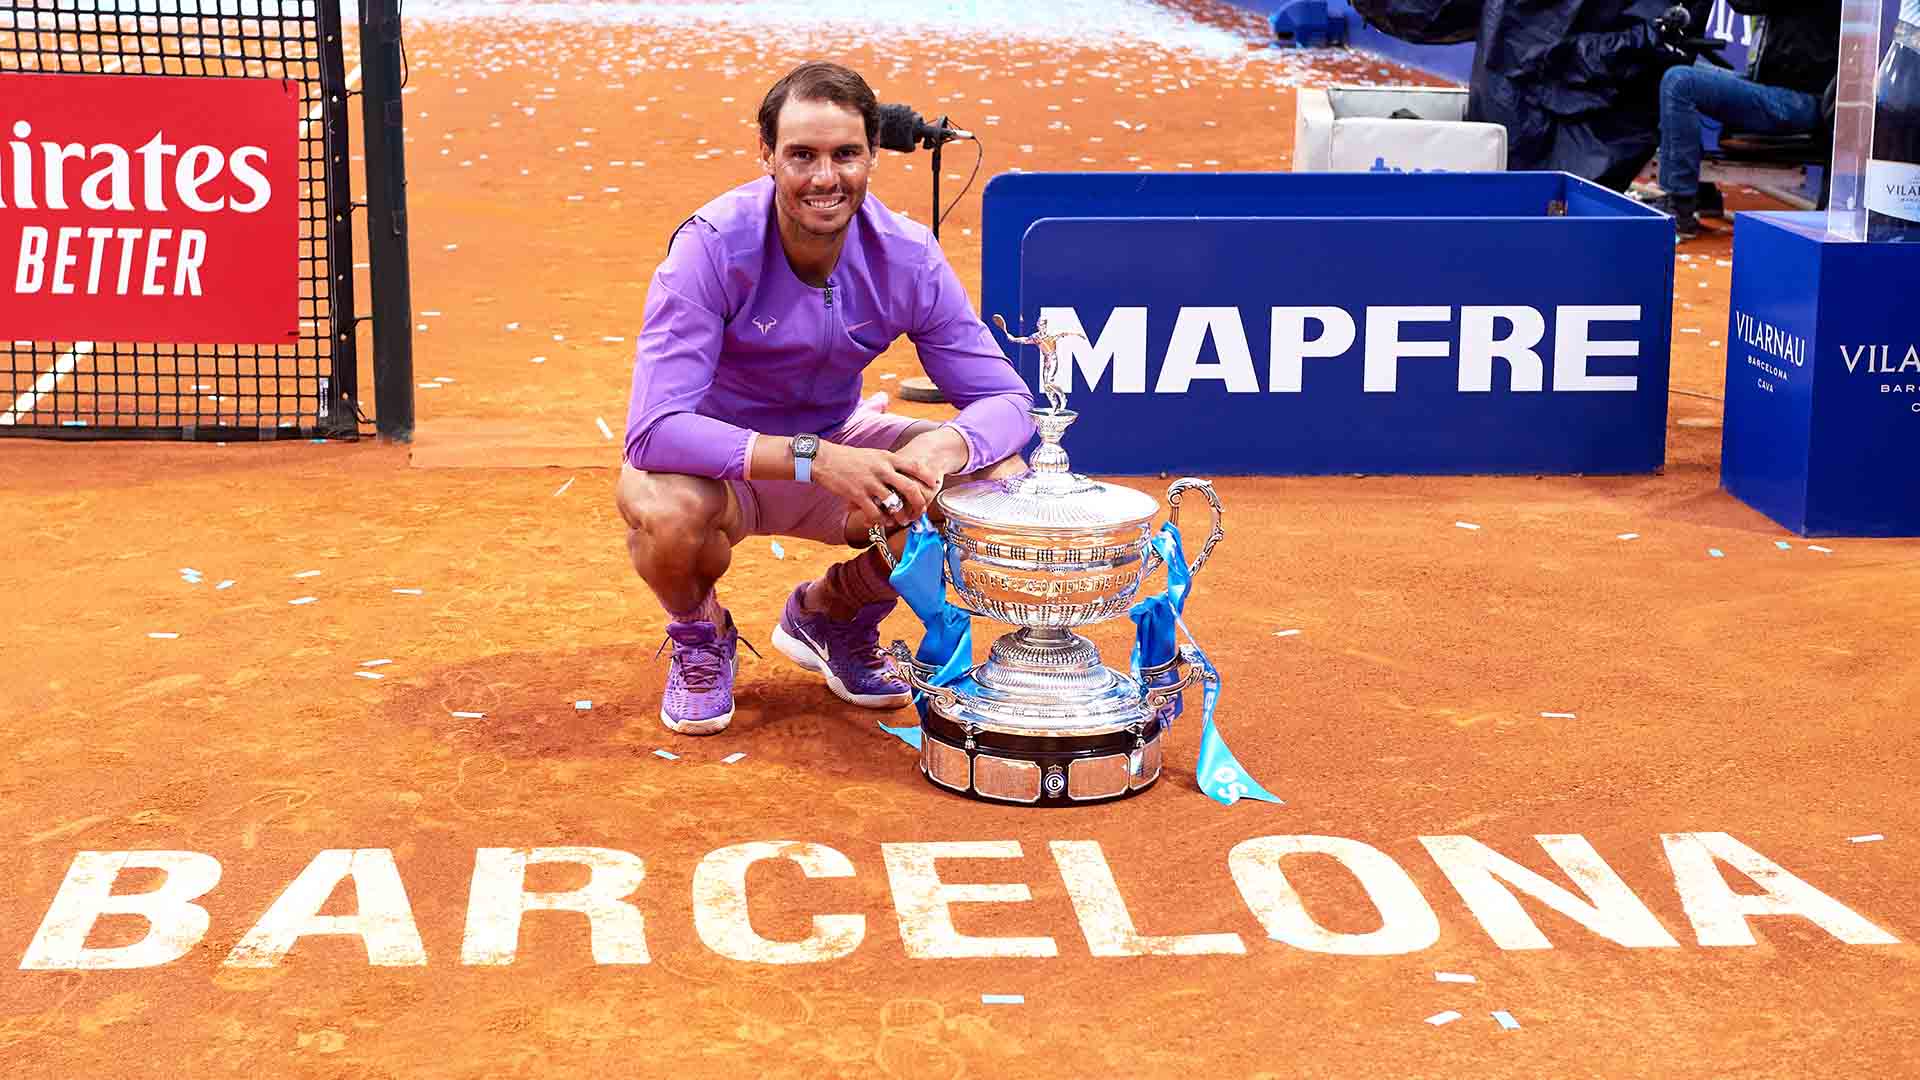 Rafael Nadal has won a tour-level title in 18 consecutive seasons.